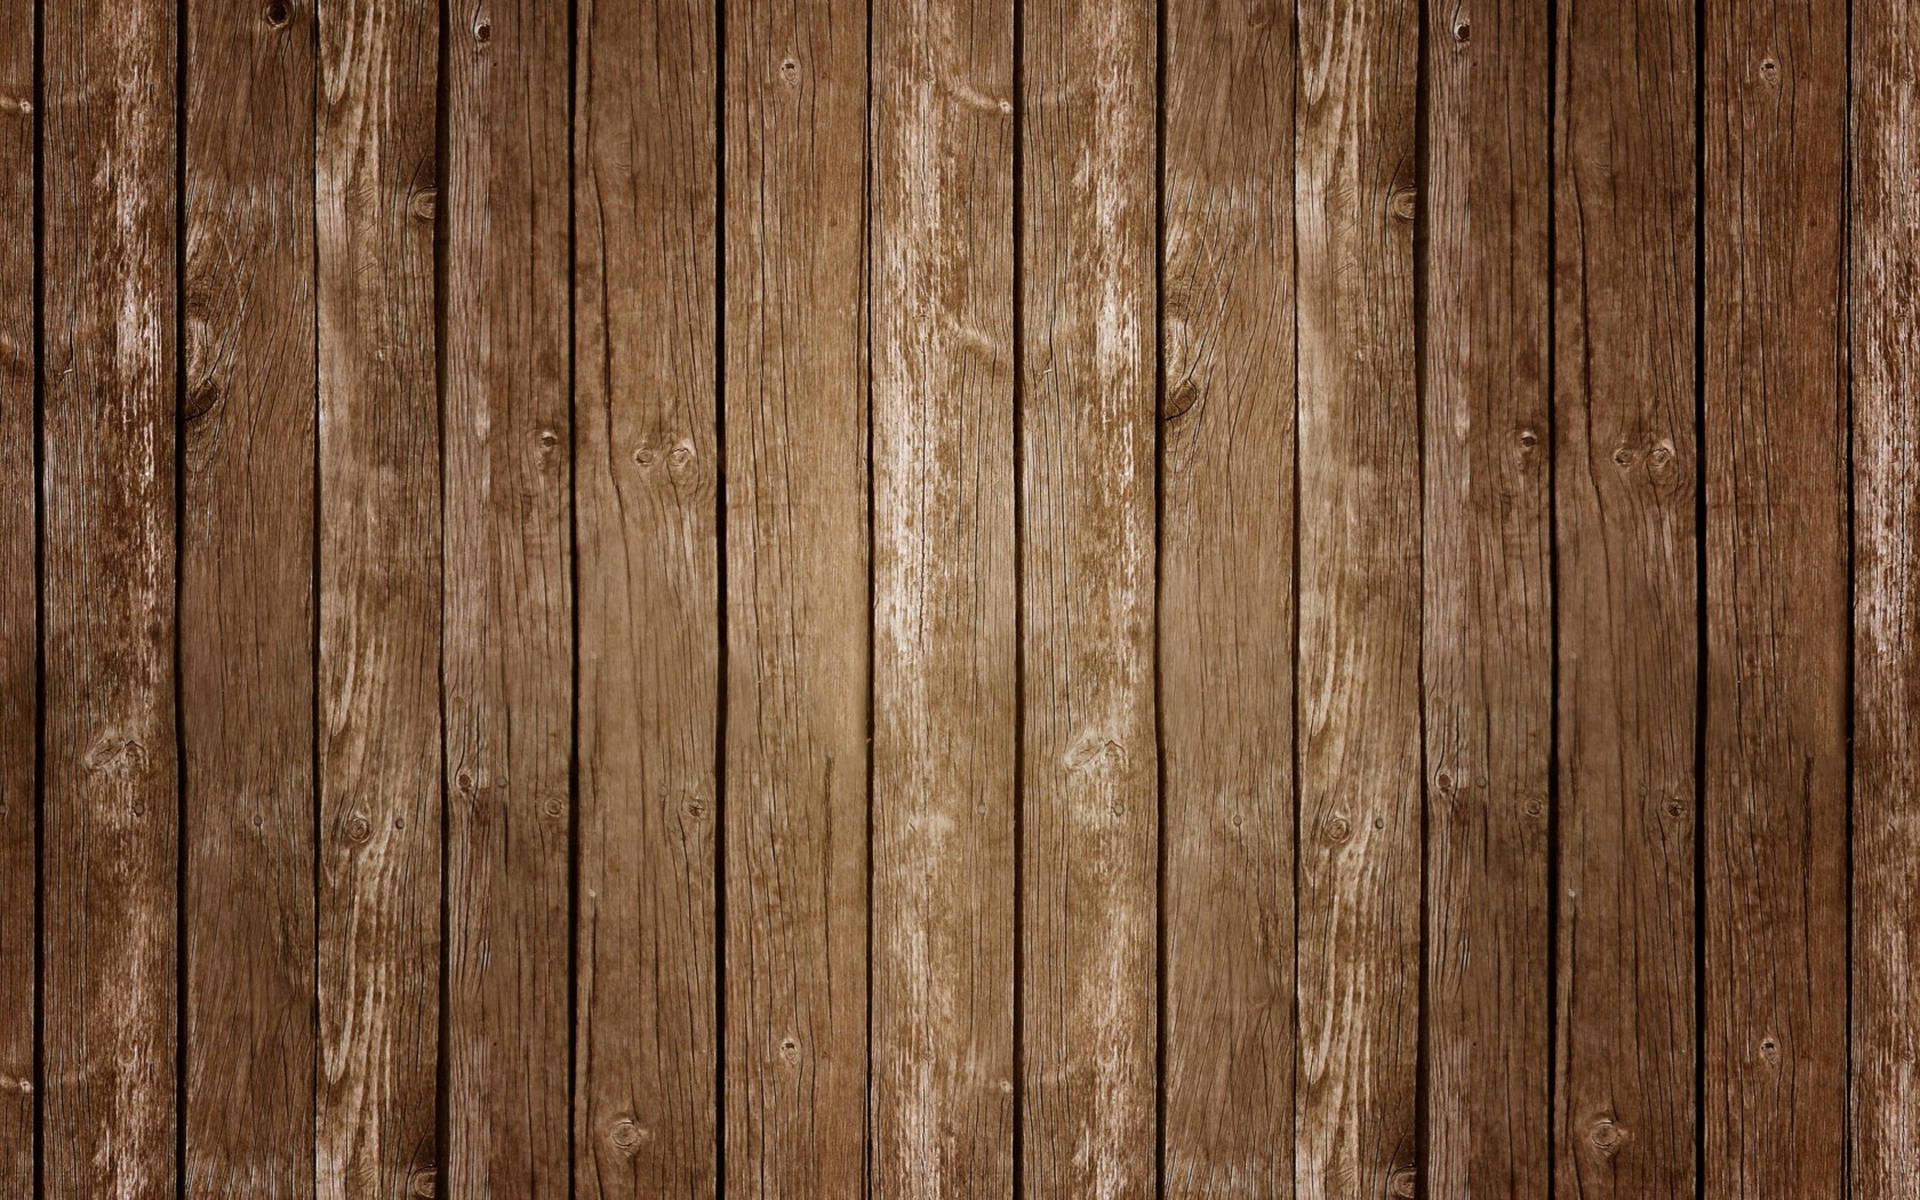 Brown wood surface with natural woodgrain Wallpaper